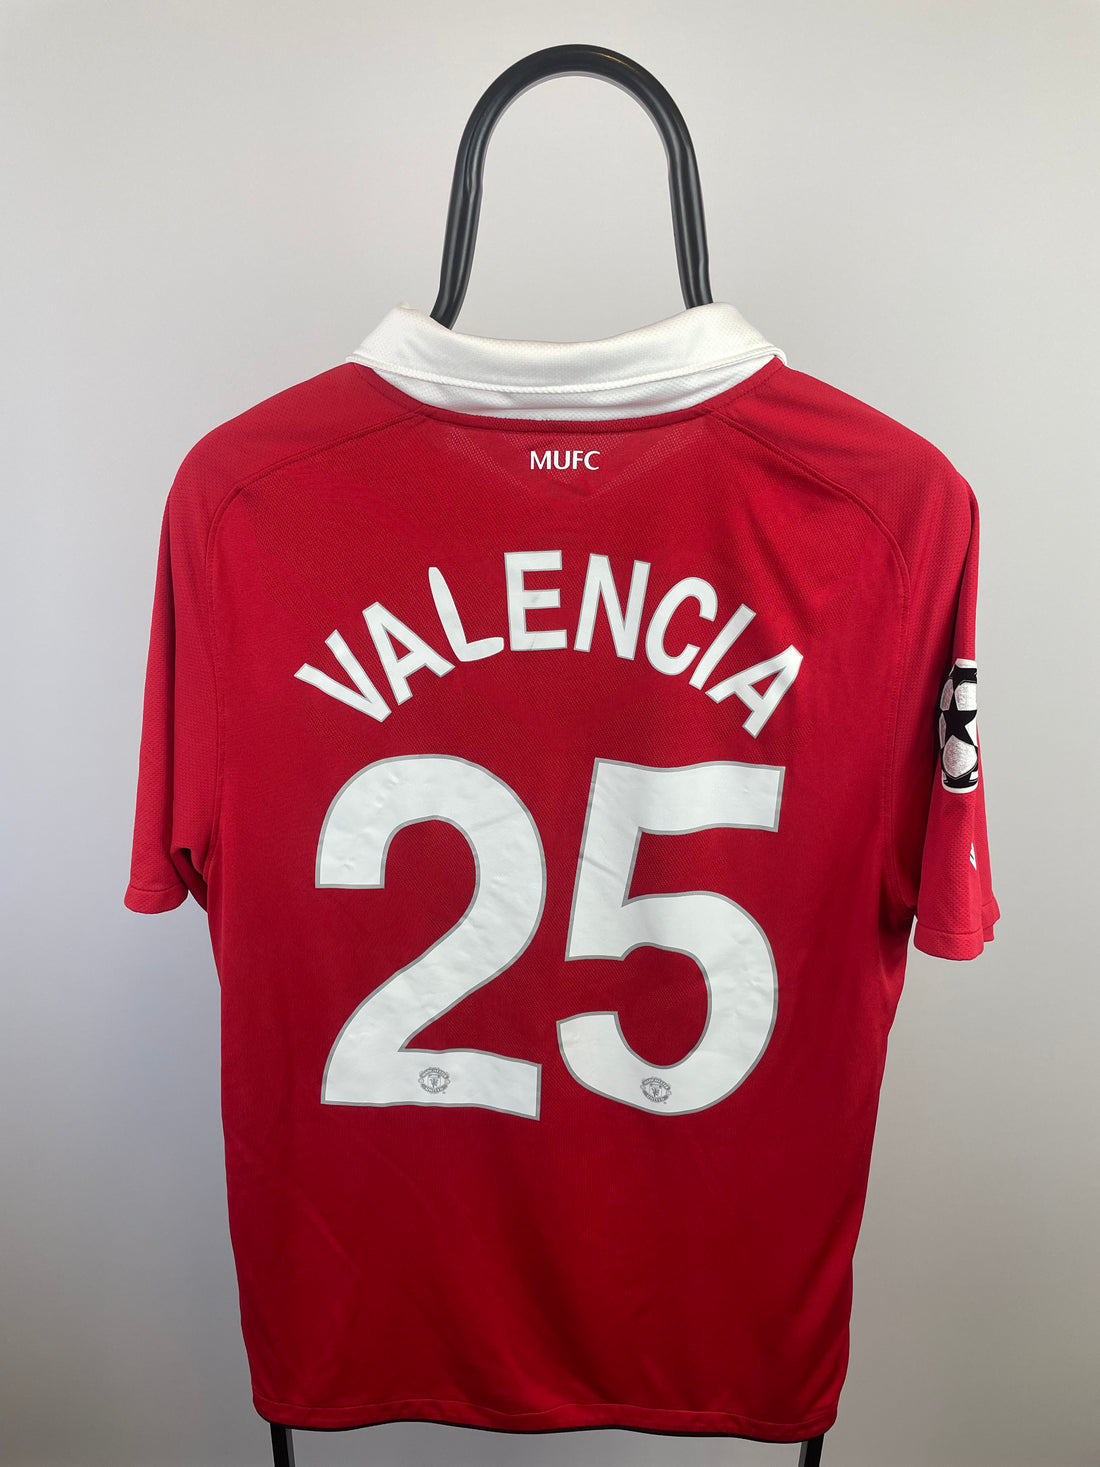 Antonio Valencia Manchester United hjemmebanetrøje - L